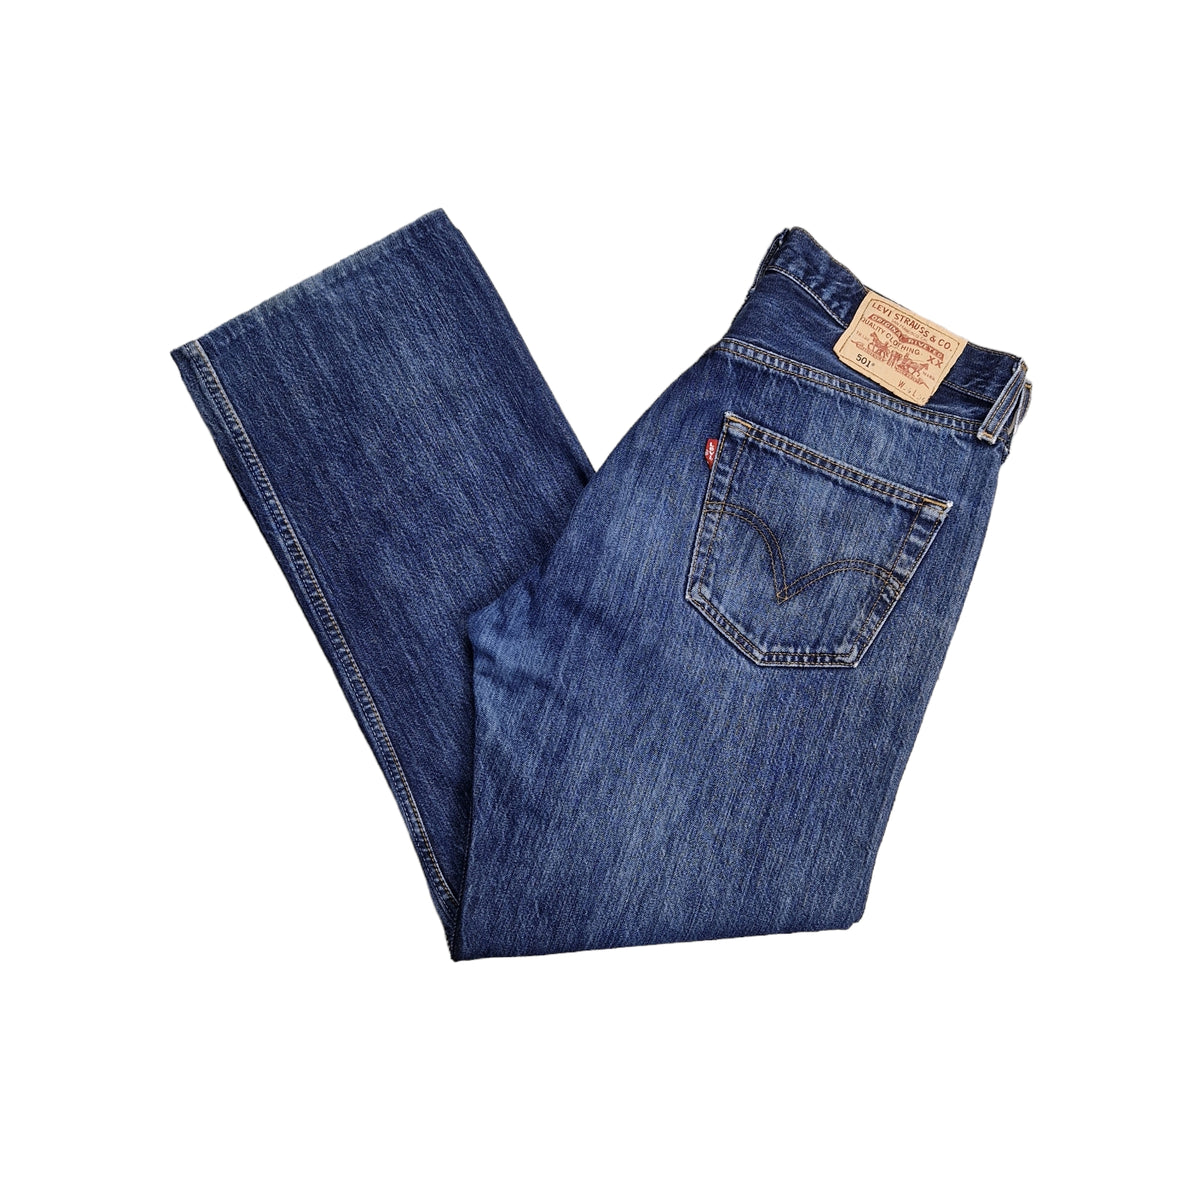 Levi's 501's Denim Jeans - Size W34 L30